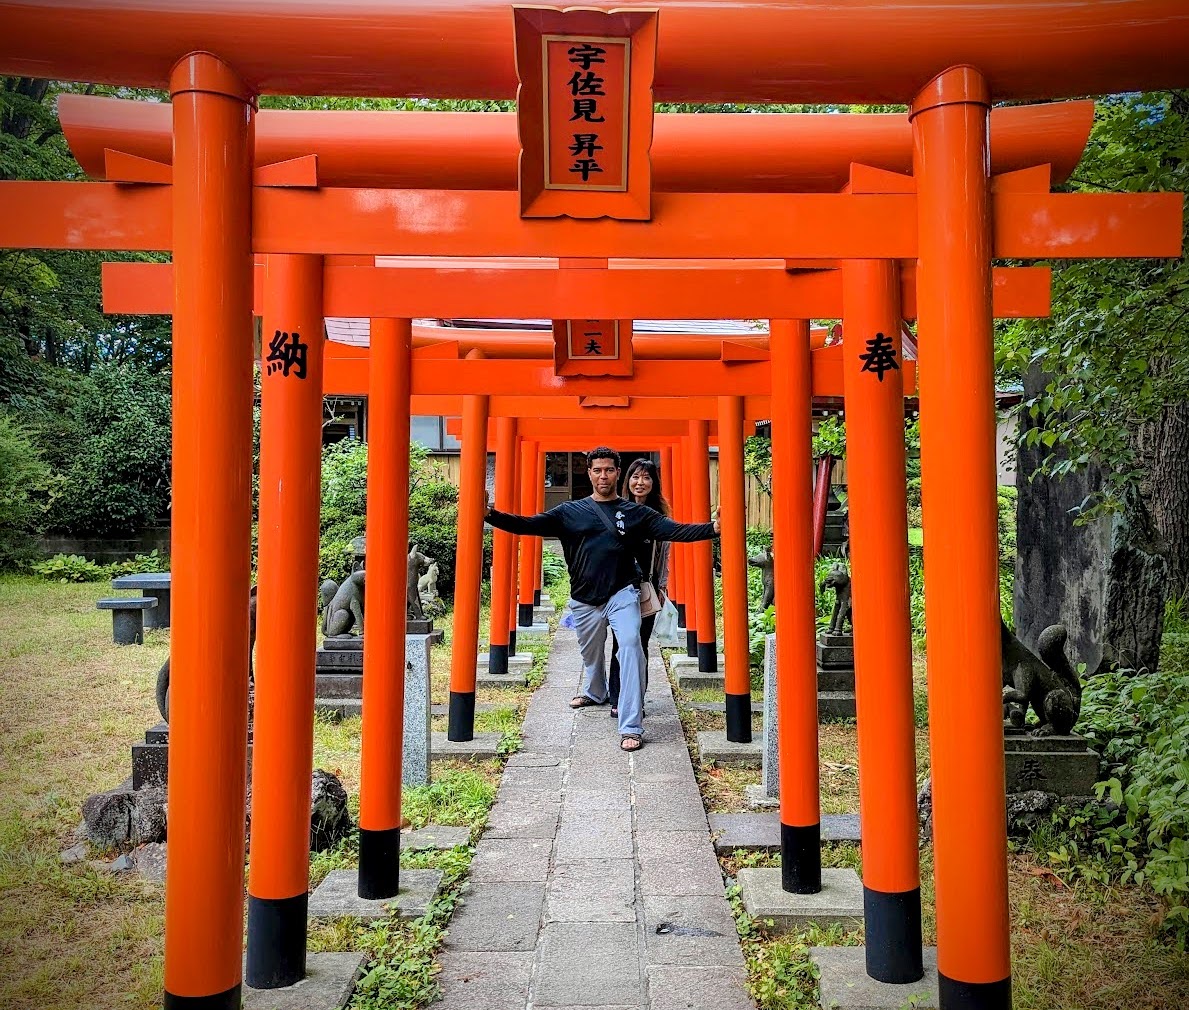 Senshu Koen Park located in Akita City, Japan, built at Kubota-jo Castle, former castle of the Satake clan, the feudal lords of Akita